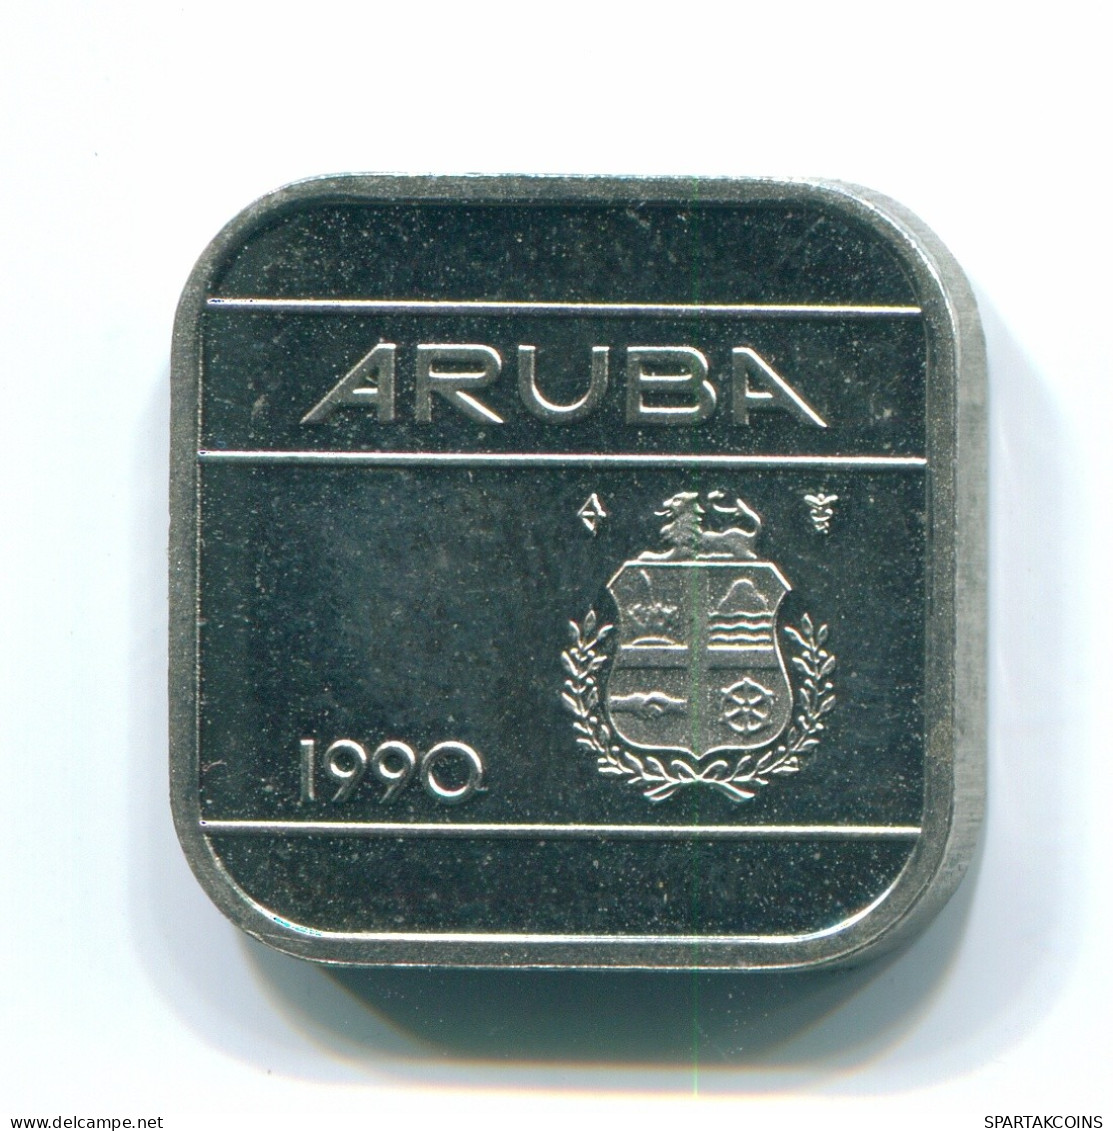 50 CENTS 1990 ARUBA (NIEDERLANDE NETHERLANDS) Nickel Koloniale Münze #S13645.D.A - Aruba